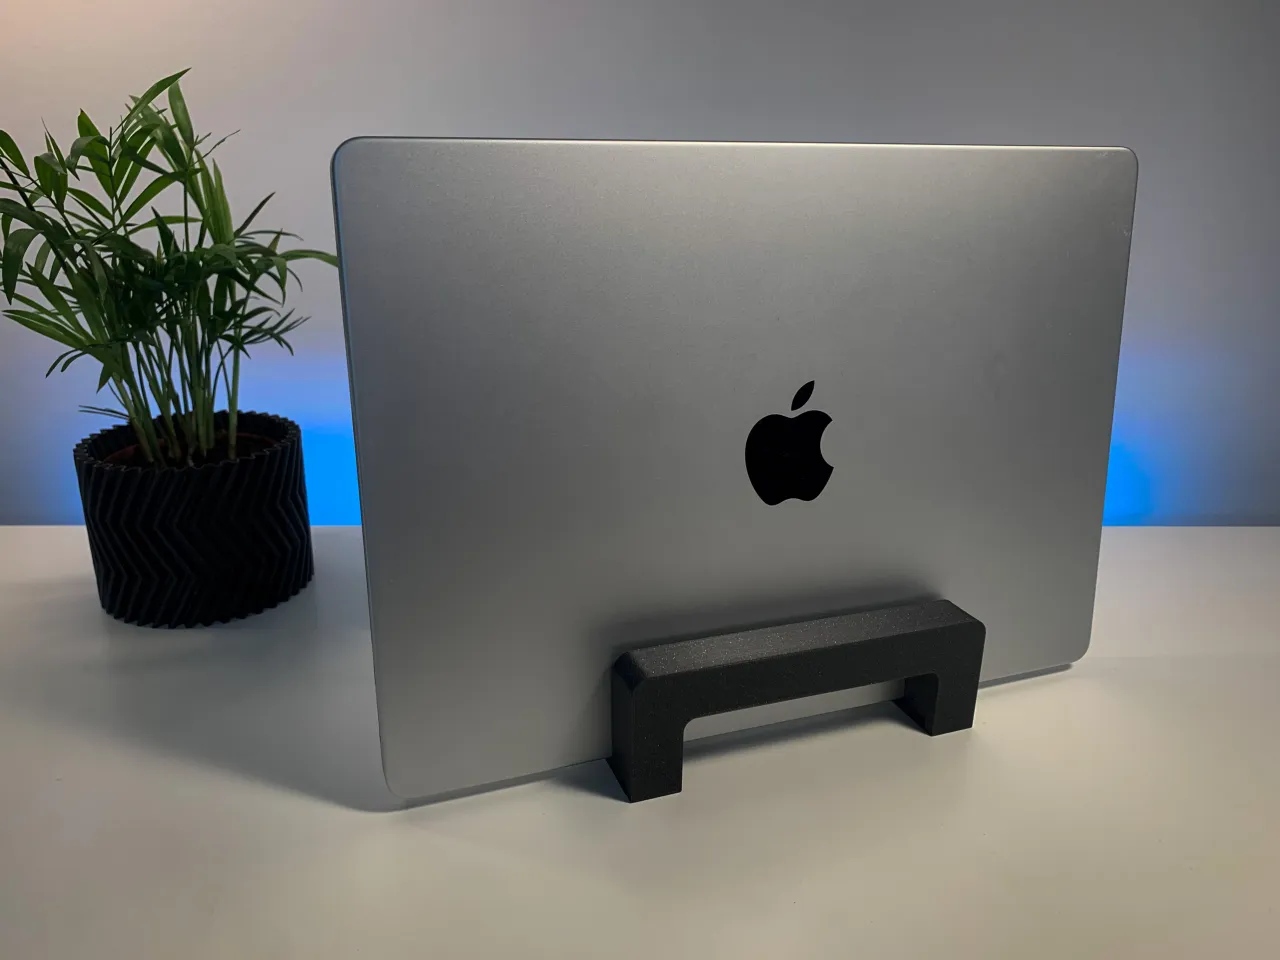 STL file Vertical laptop stand 19mm wide 💻・3D printer design to